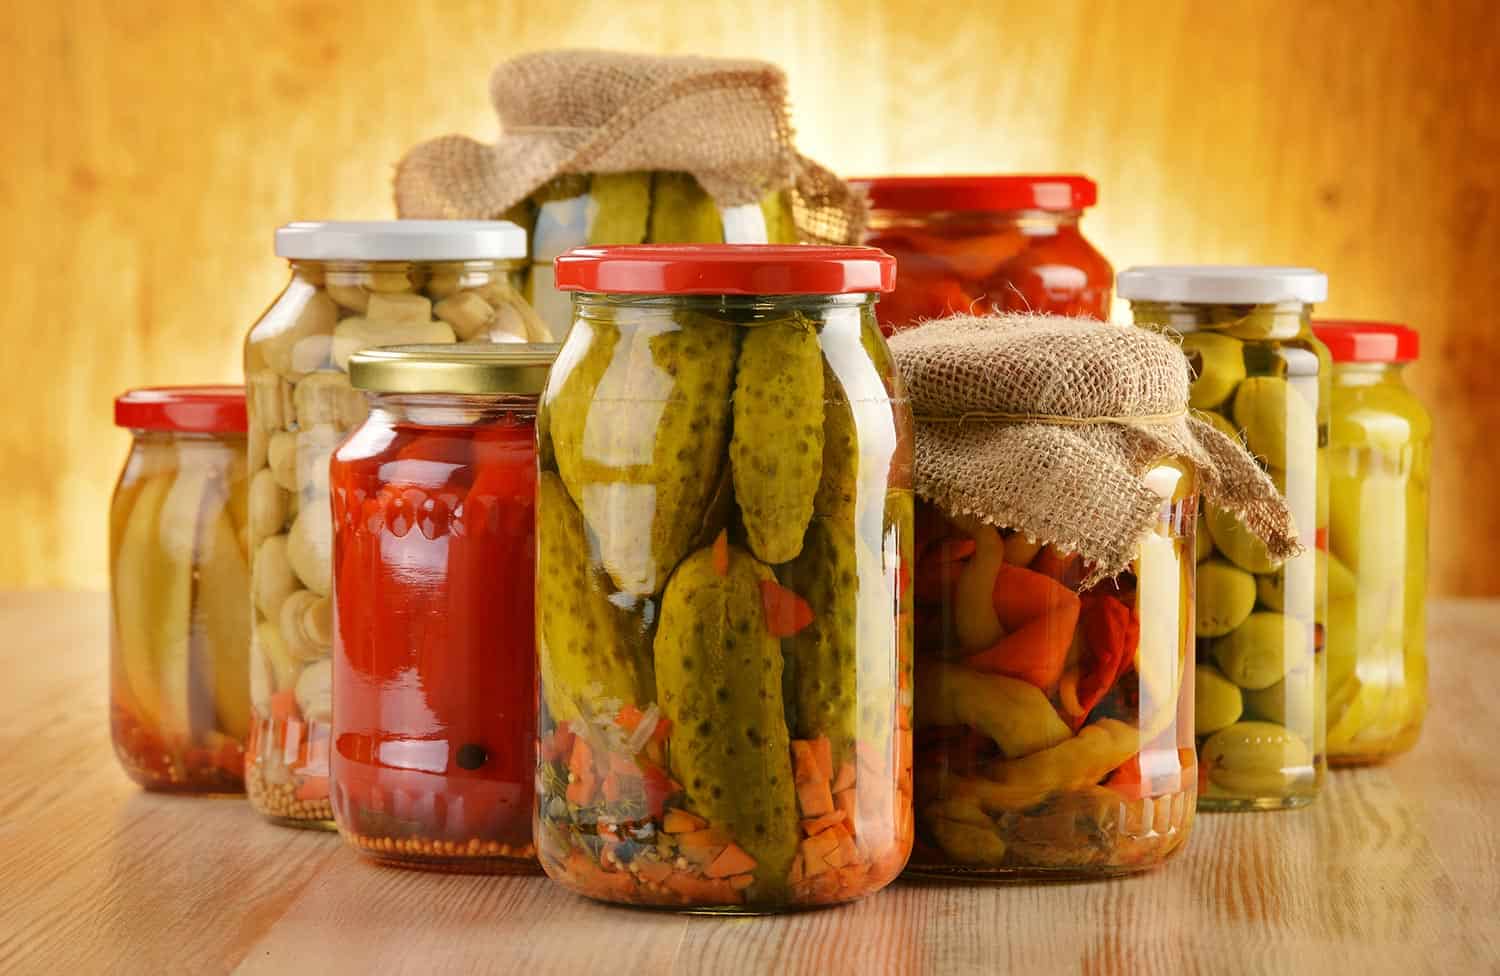 Composition with jars of pickled vegetables